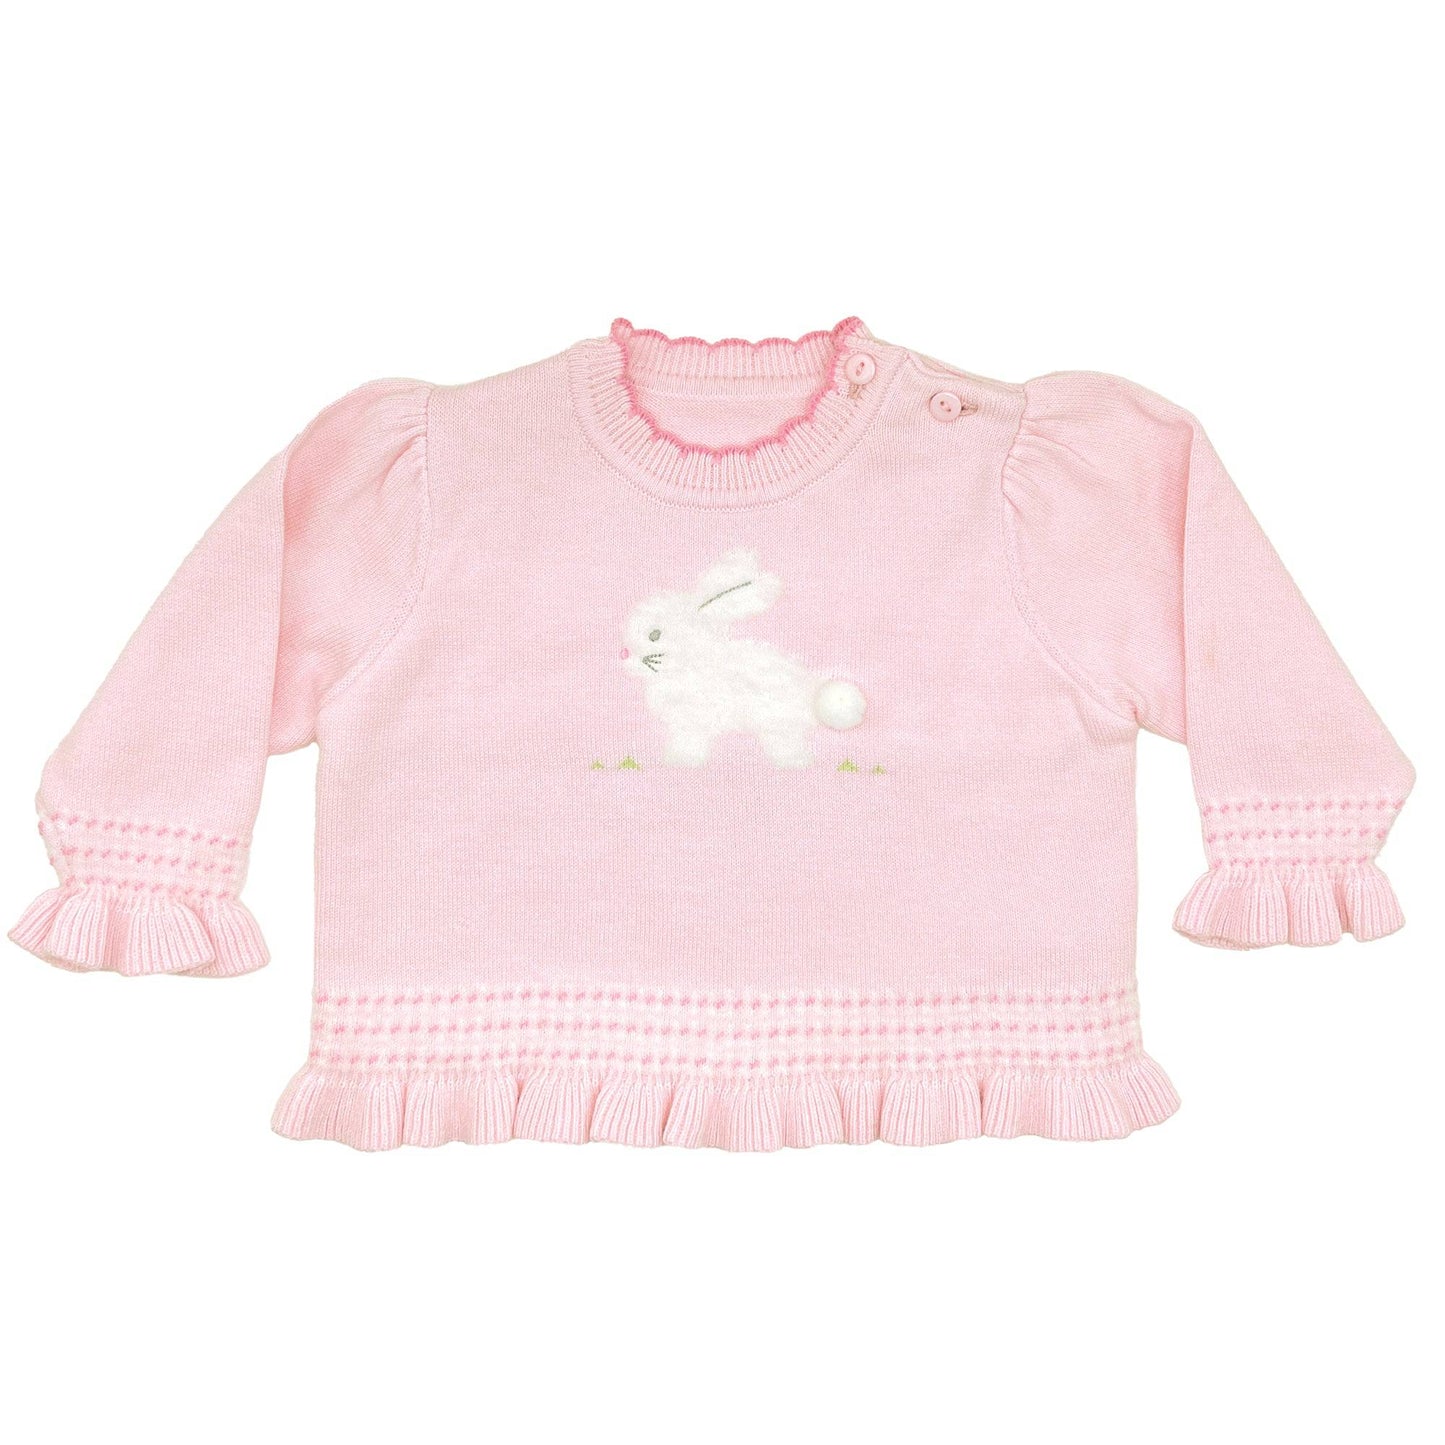 Zubels Fuzzy Bunny Lightweight Sweater in Pink